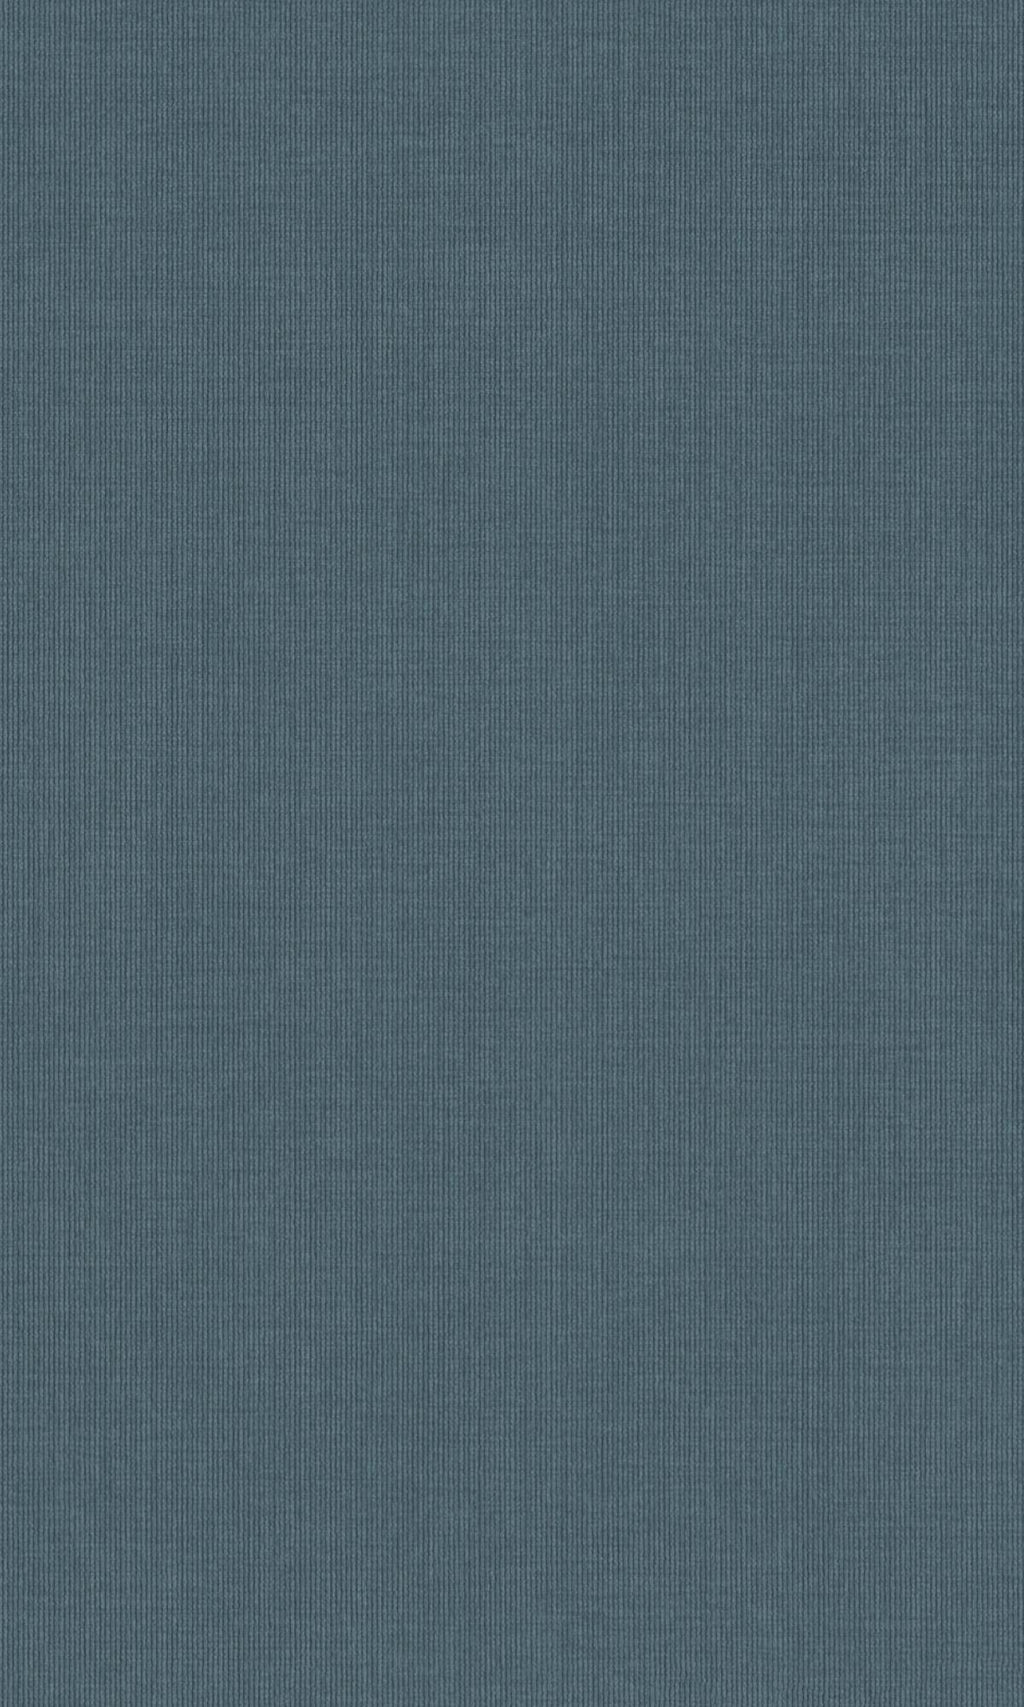 Grey-Blue Textured Commercial Wallpaper C7388